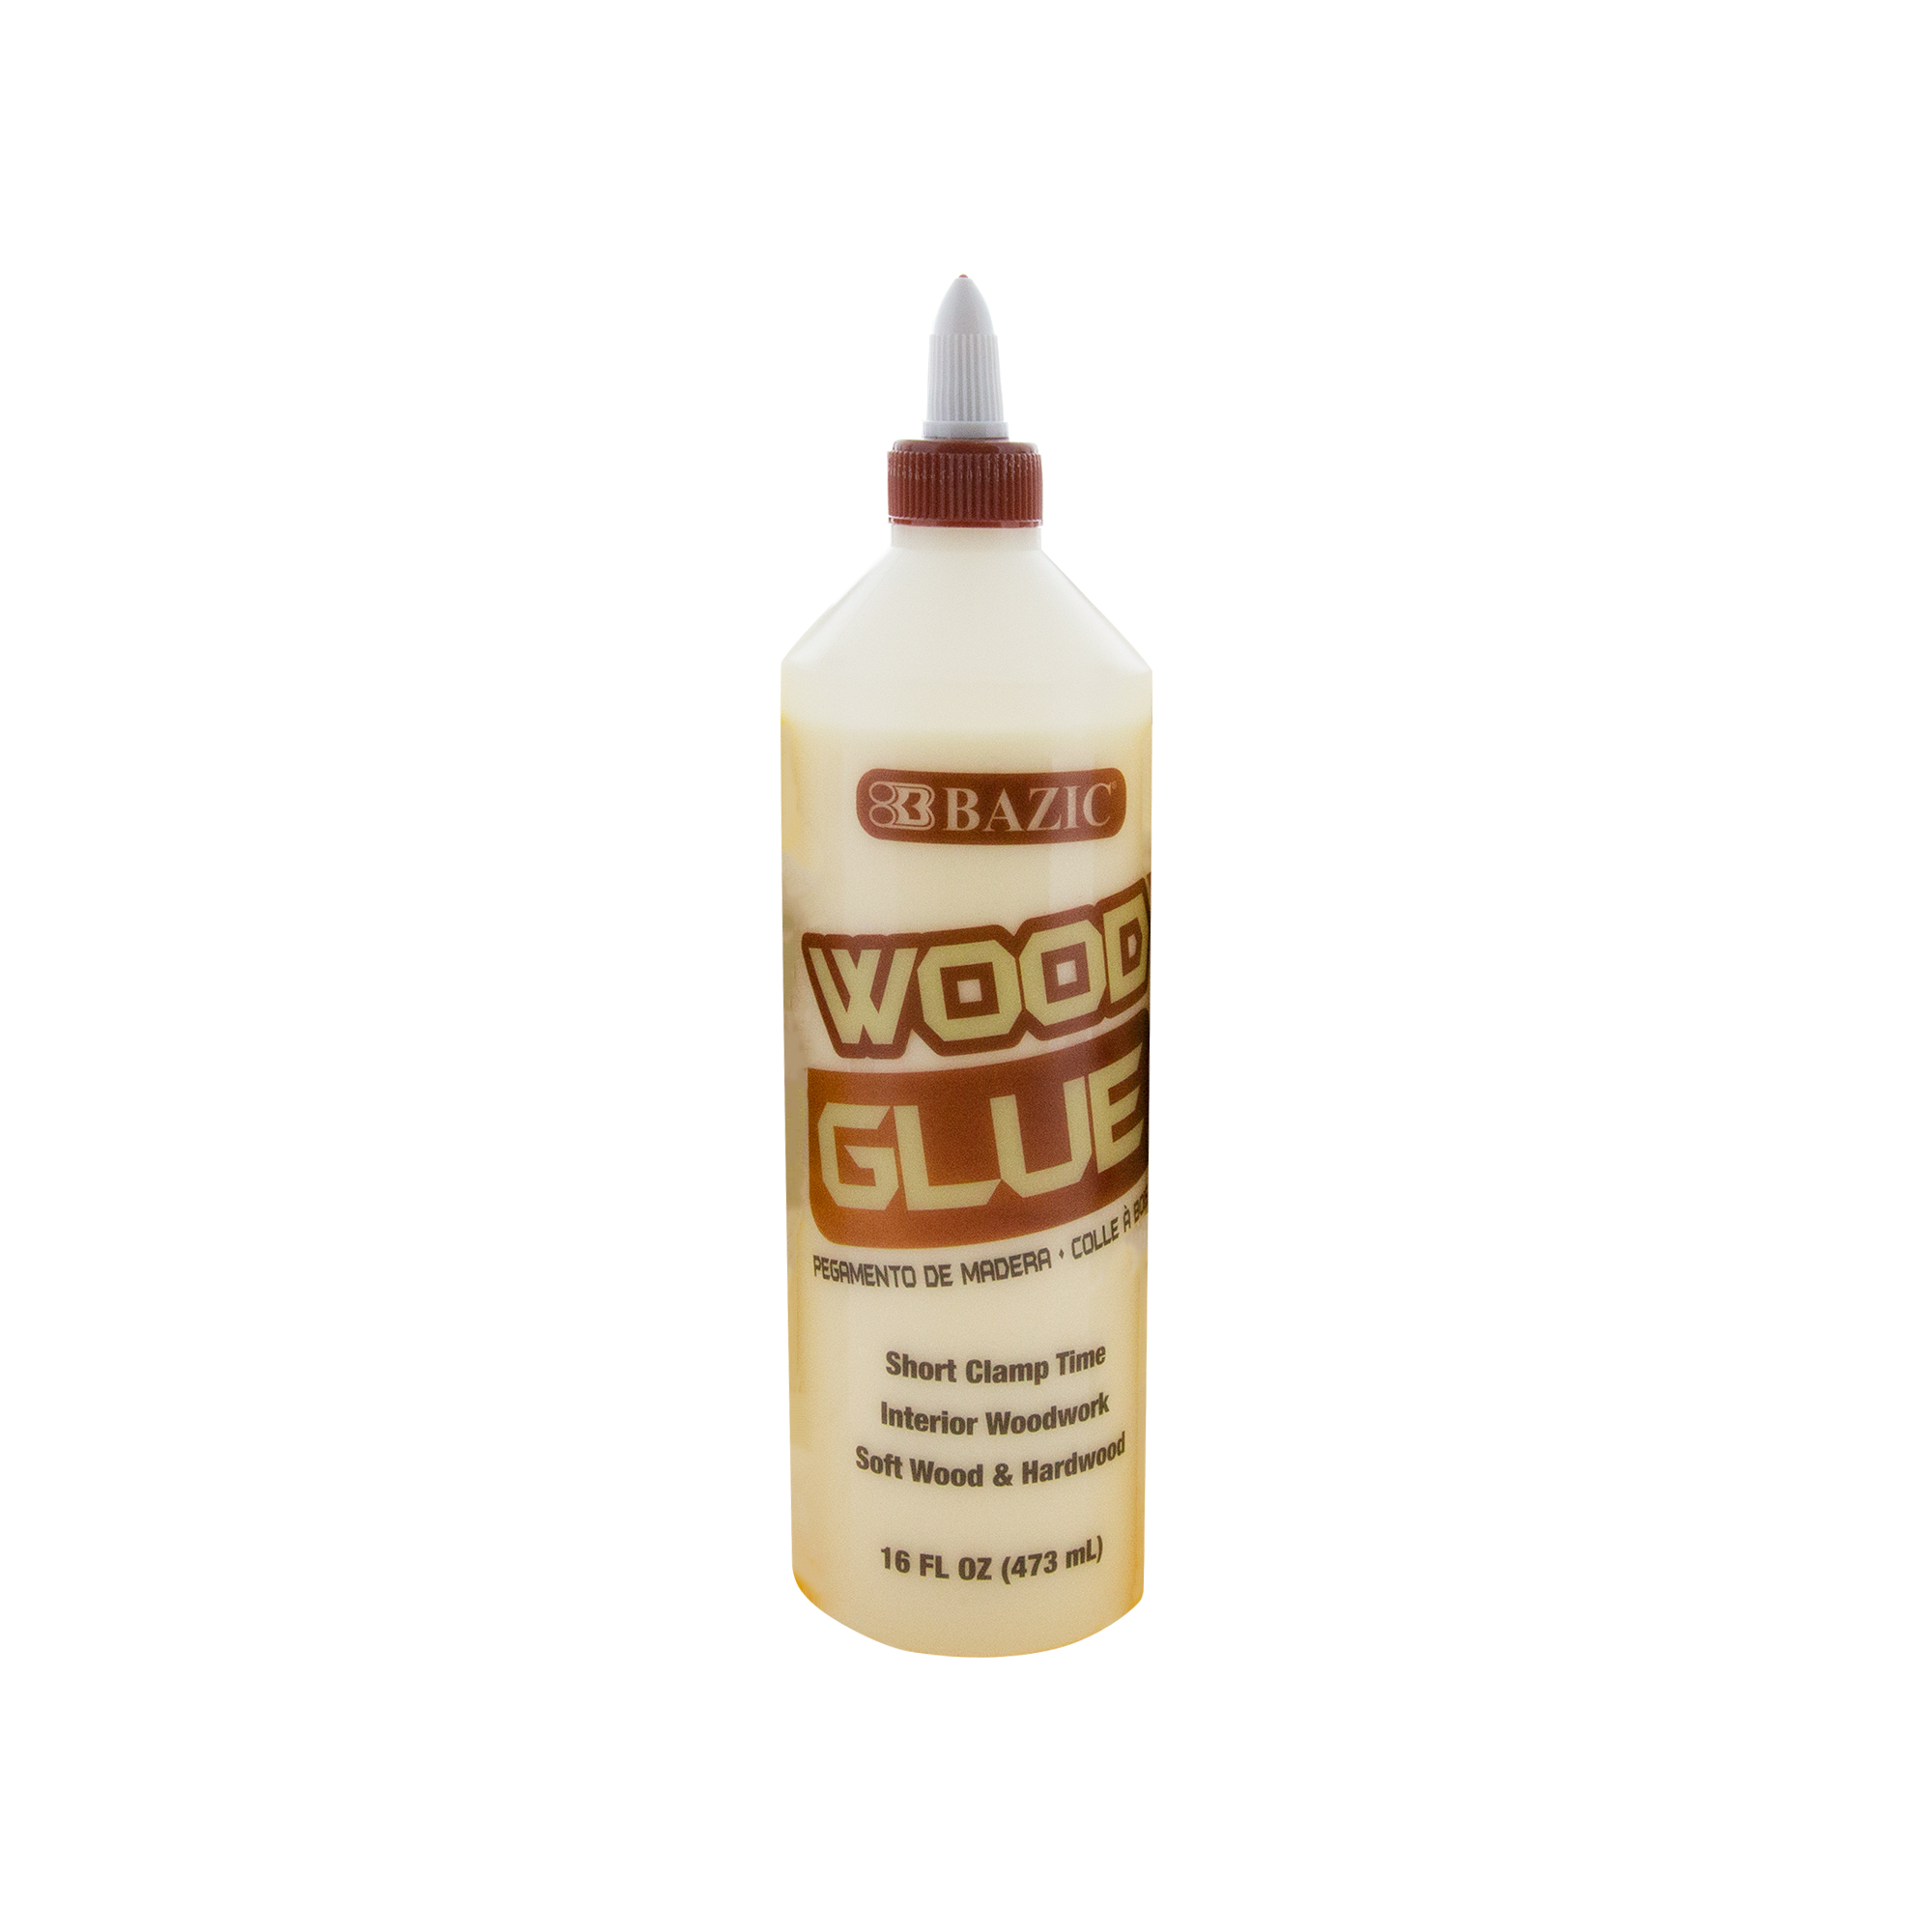 Wood Glue 16 FL OZ (472 mL)